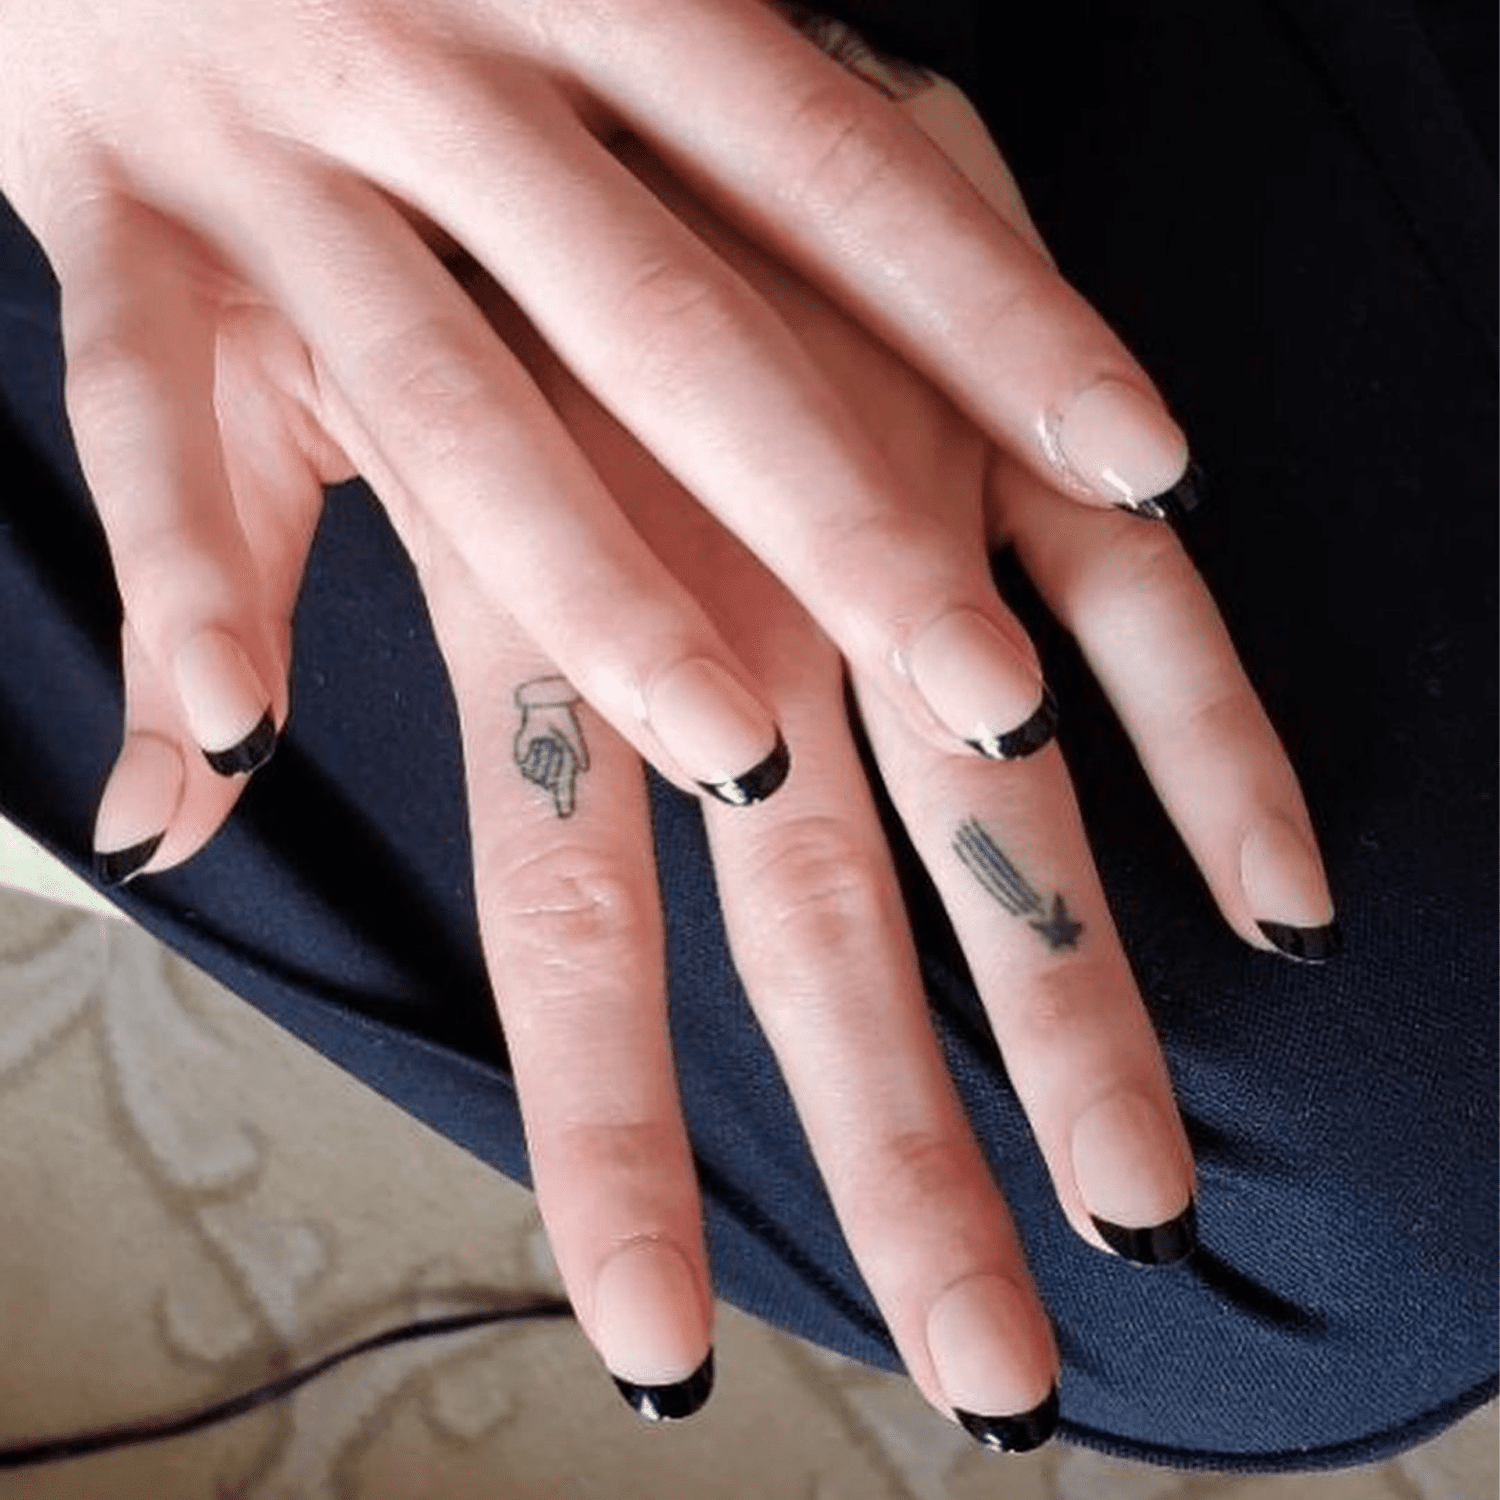 Pheobe布拉杰的漆皮法国修指甲